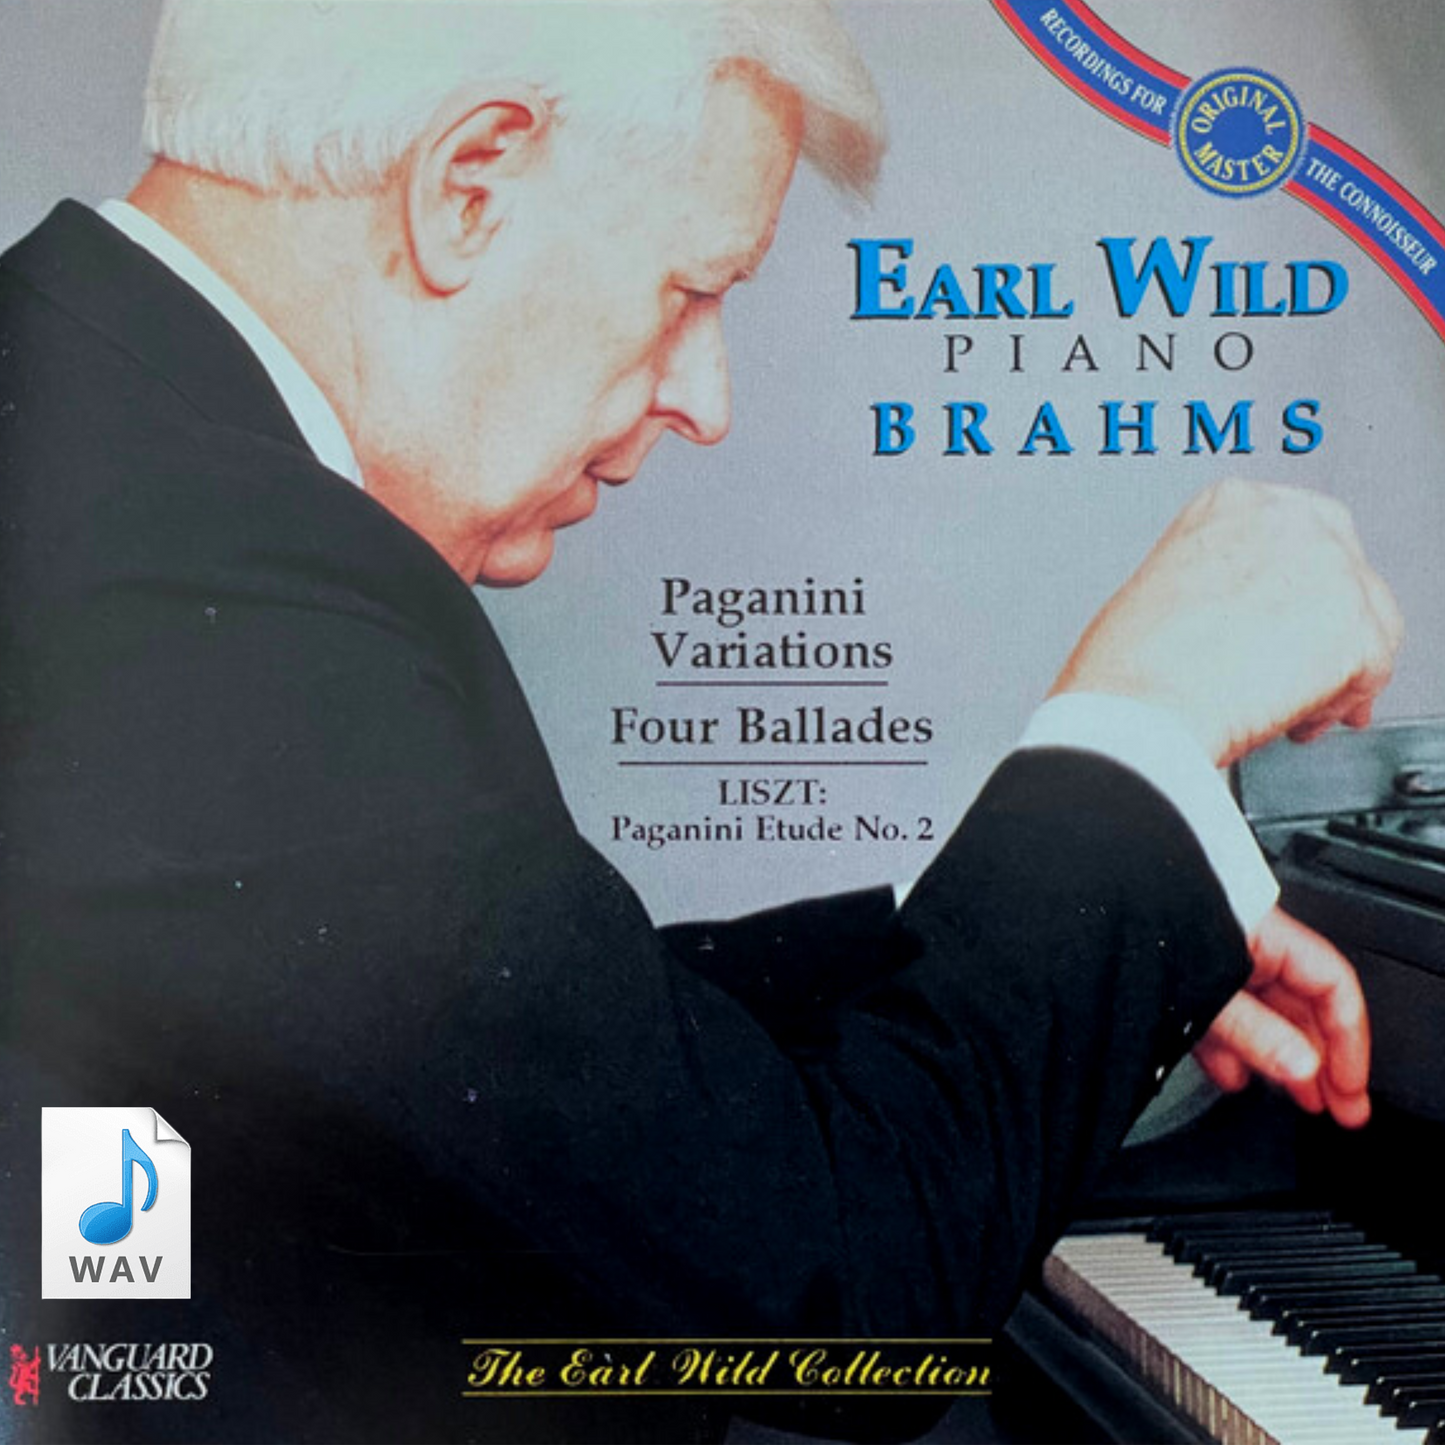 EARL WILD PLAYS BRAHMS & LISZT (DIGITAL DOWNLOAD)